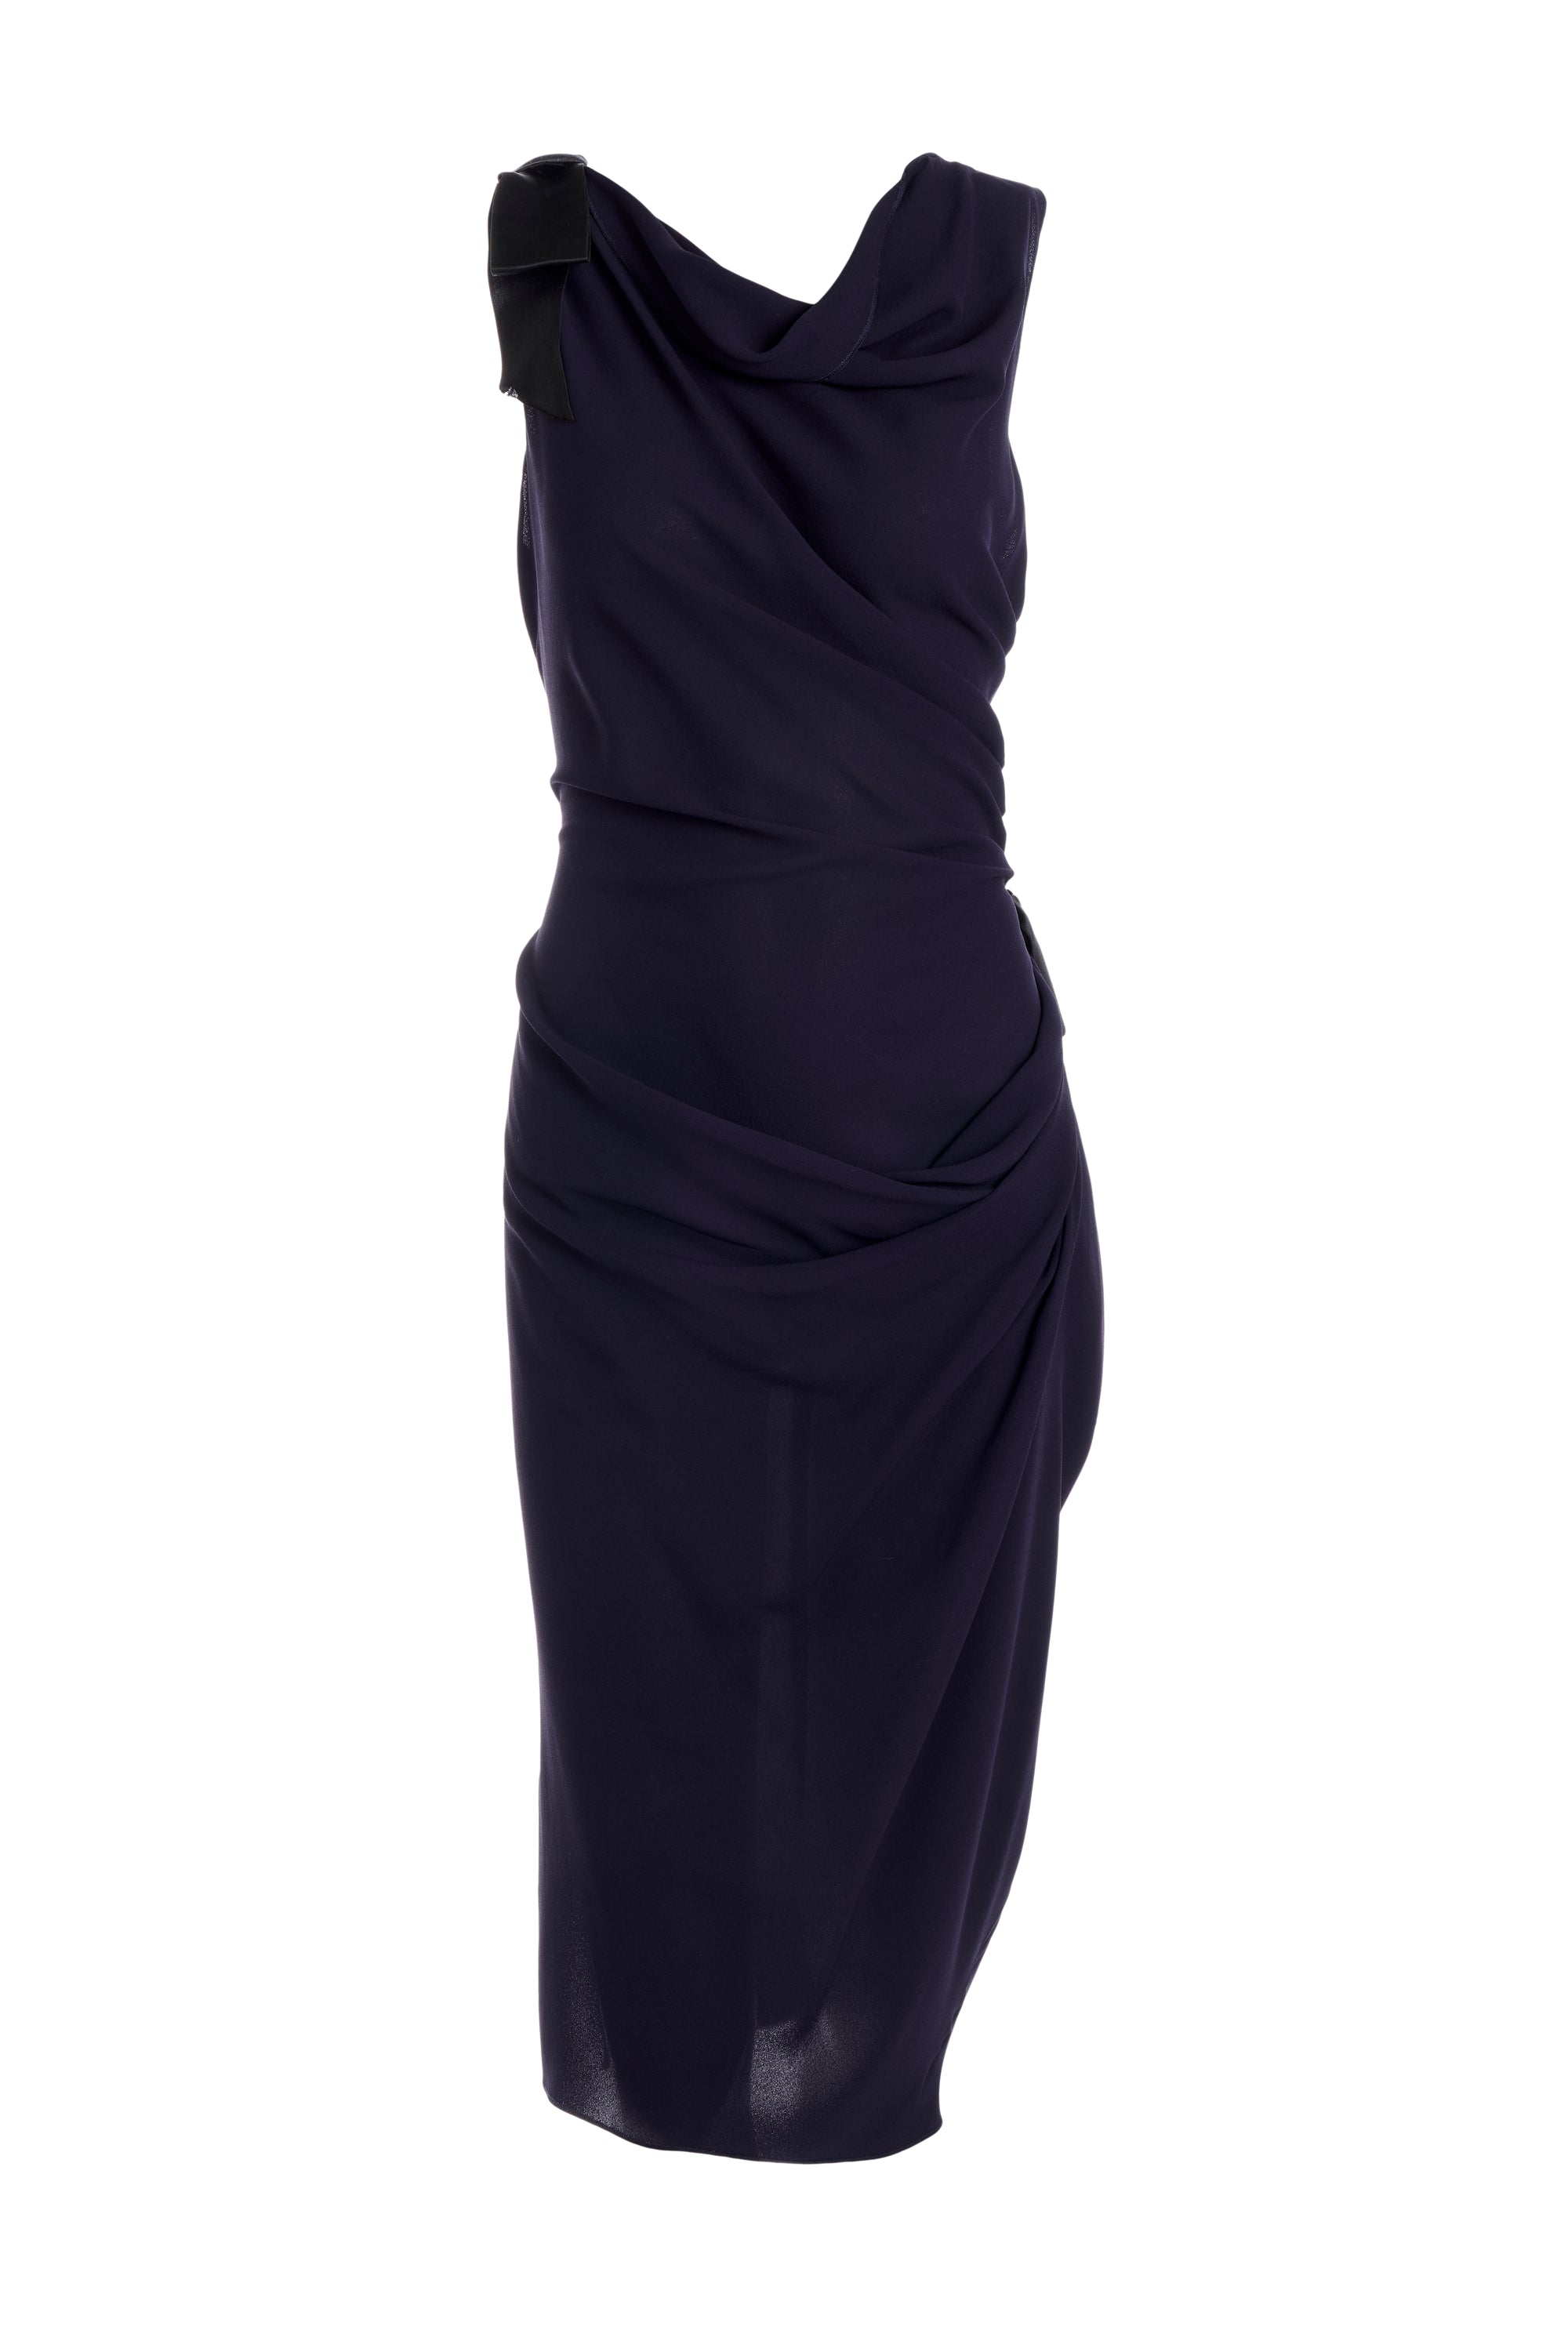 Nina Ricci Navy and Black Silk Dress Size 38 - Foxy Couture Carmel